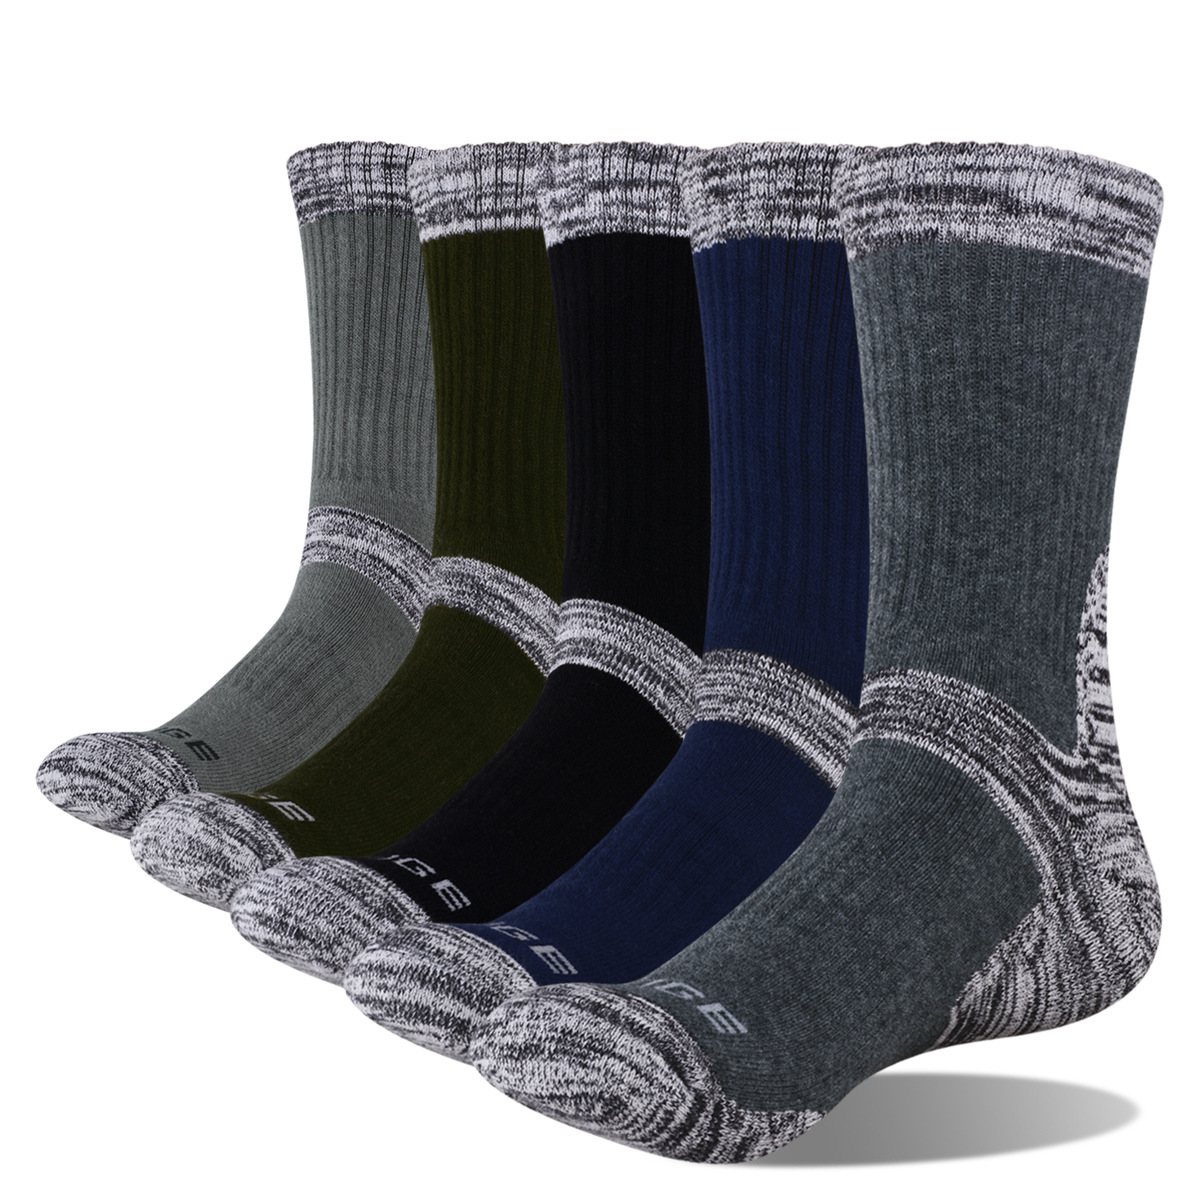 YUEDGE 10 Pairs Outdoor Socks Male Sports Socks Cotton Towel Bottom Barreled Riding Mountaineering Trekking Hiking Socks